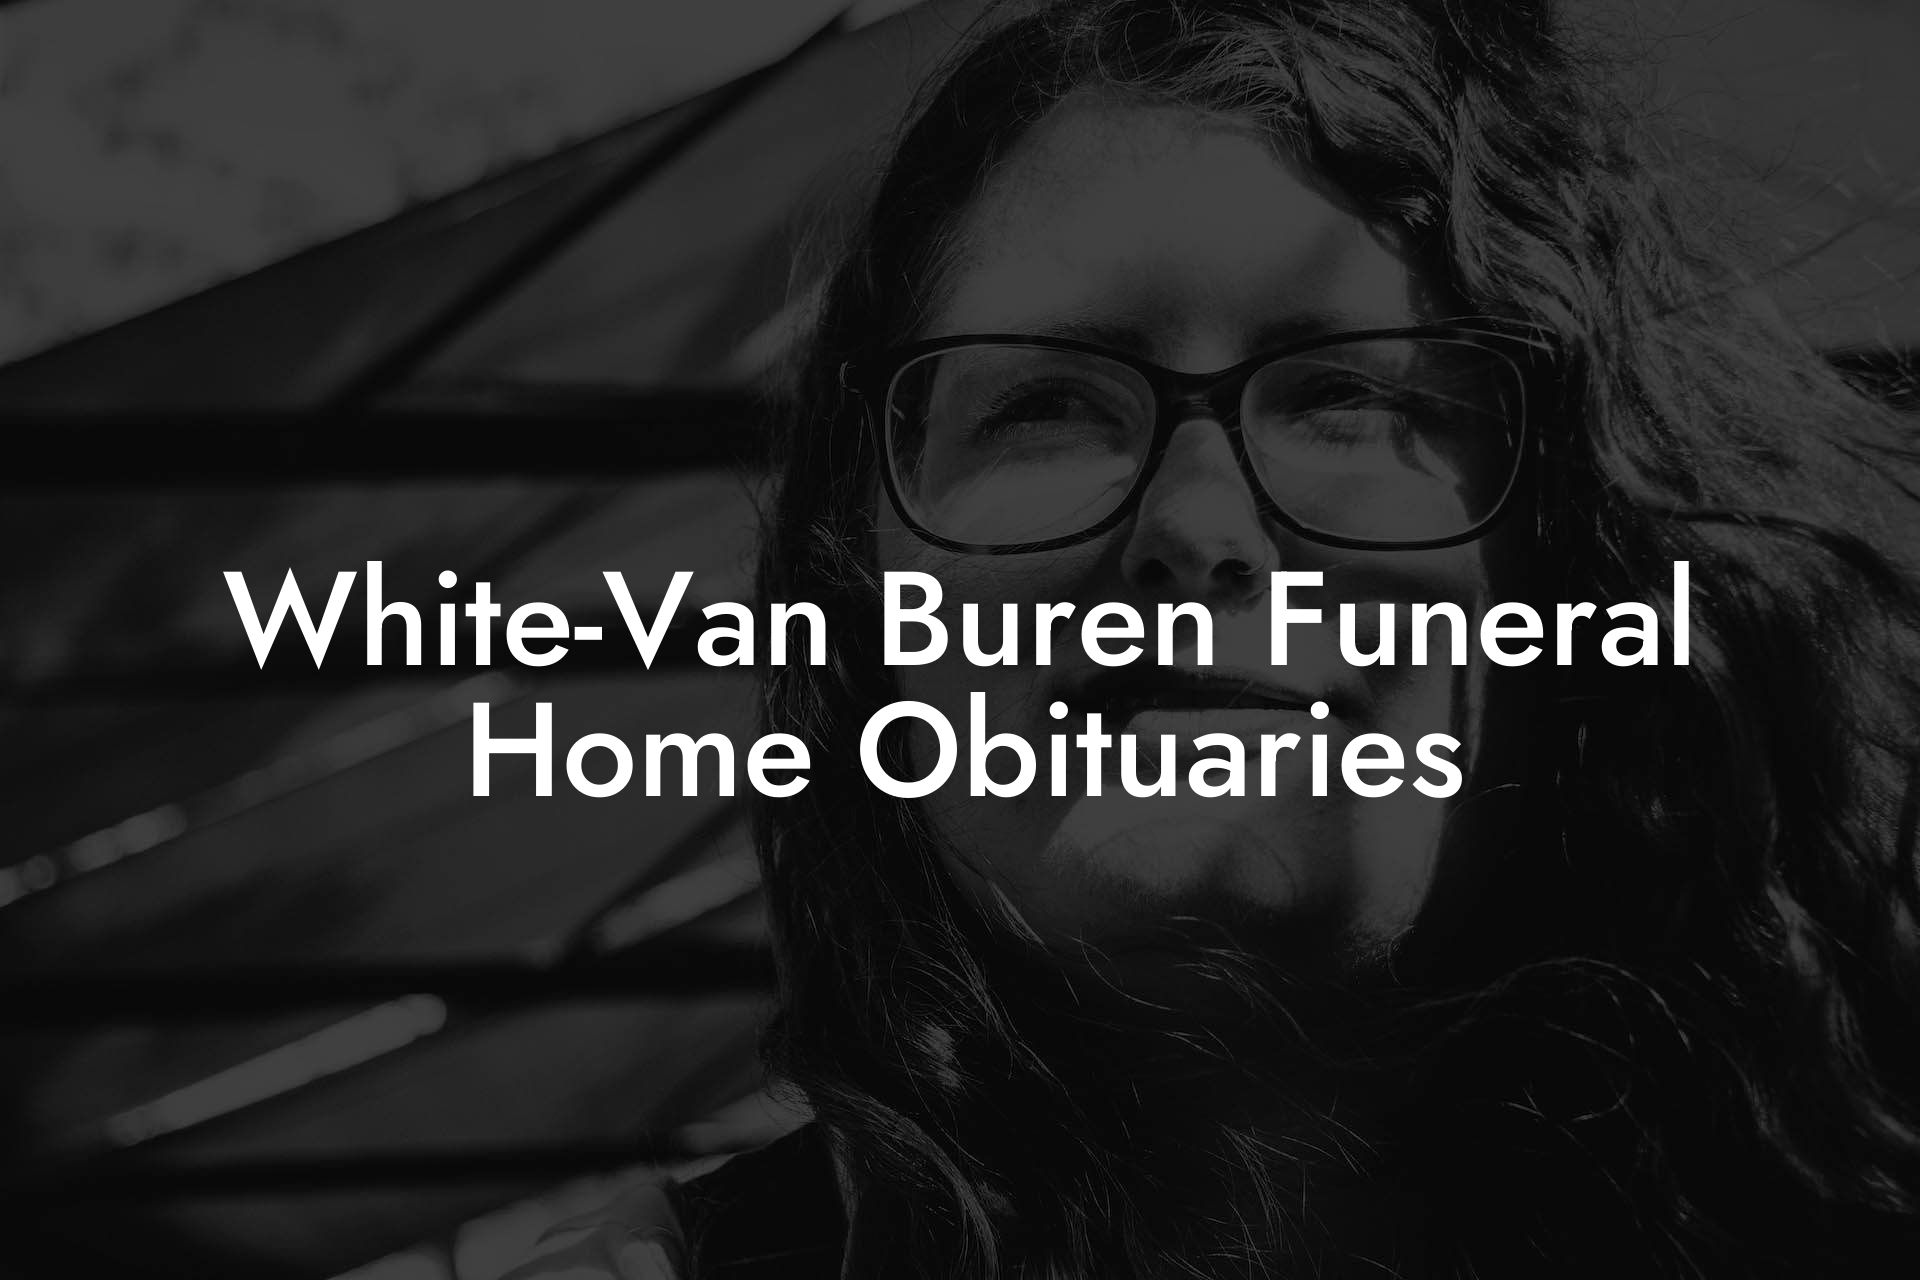 White-Van Buren Funeral Home Obituaries